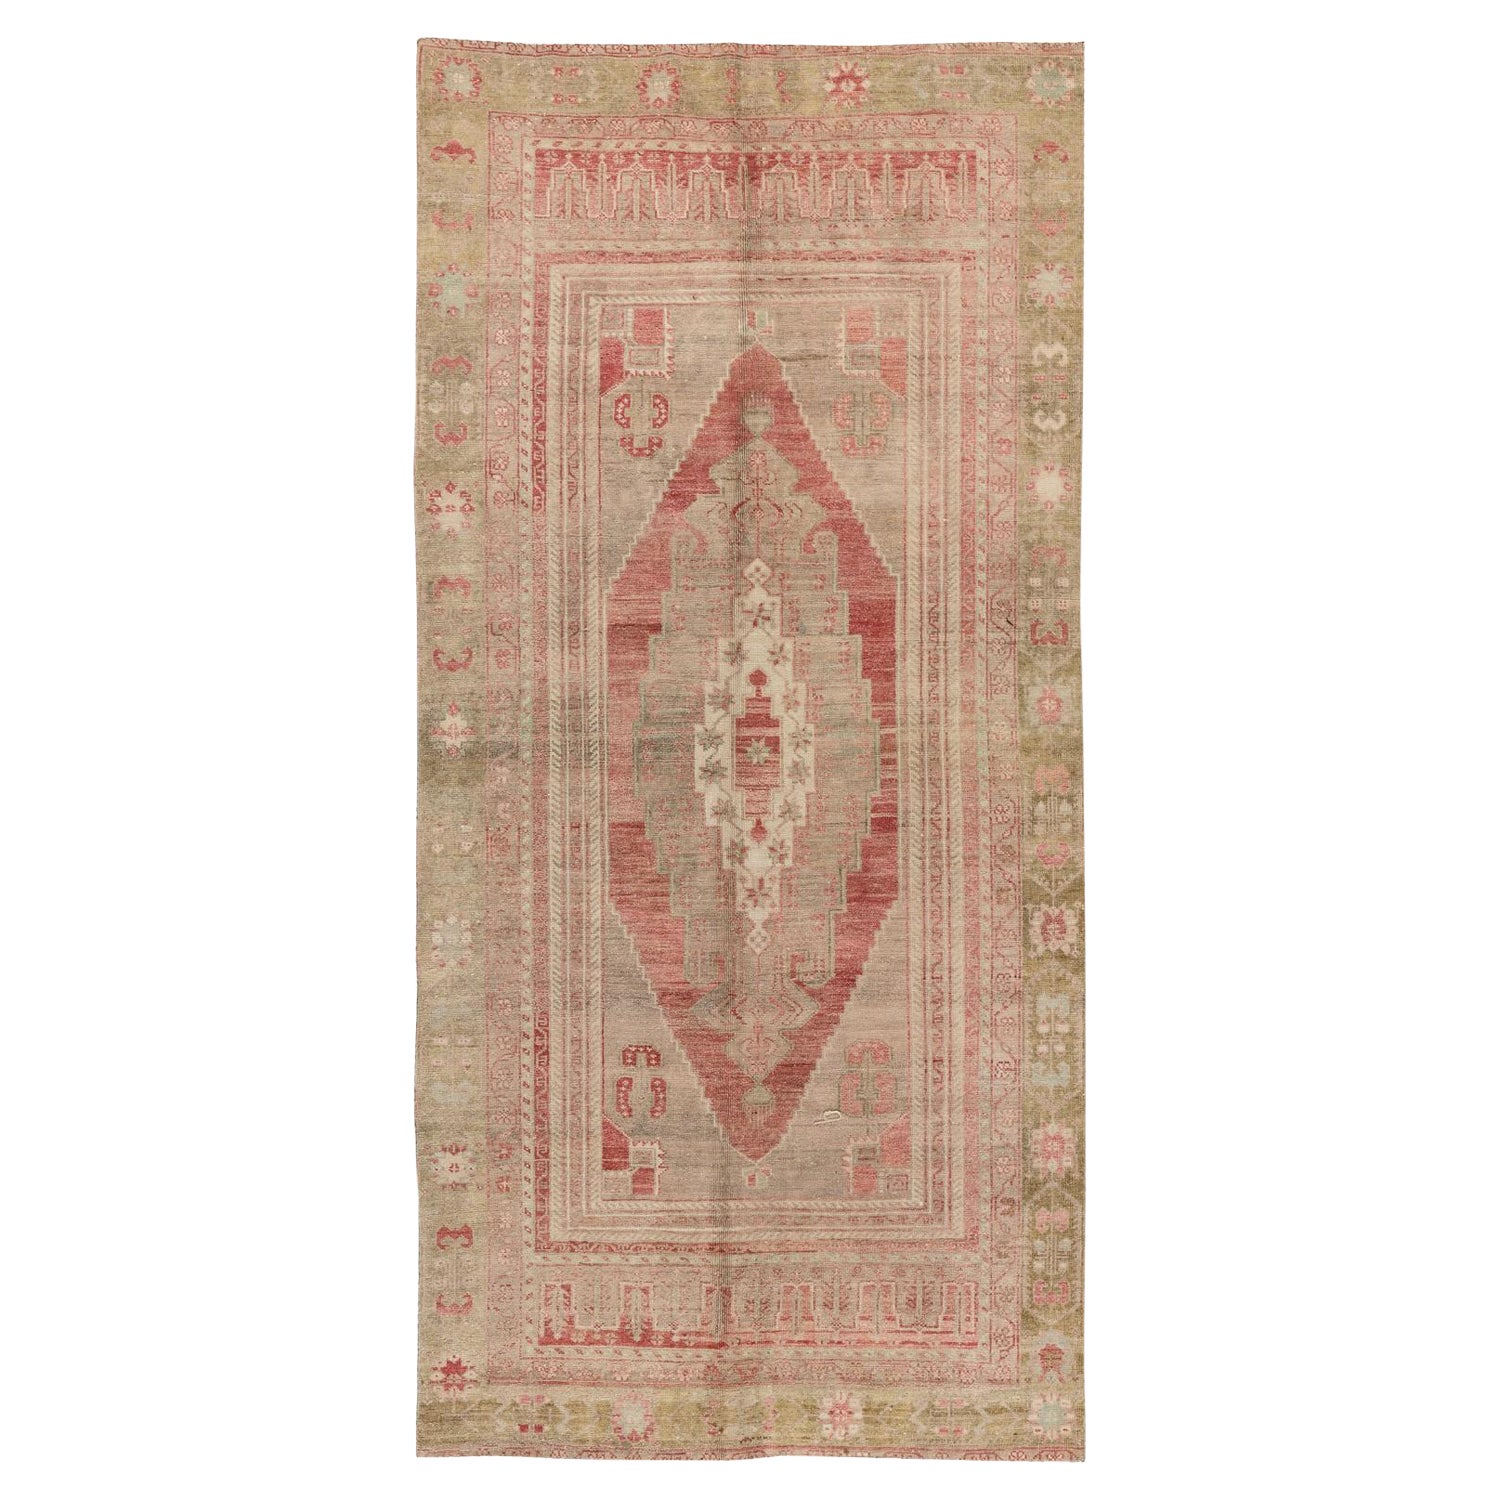 4x9.5 Ft Vintage Turkish Oushak Rug in Soft Colors. 100% Wool Oriental Carpet